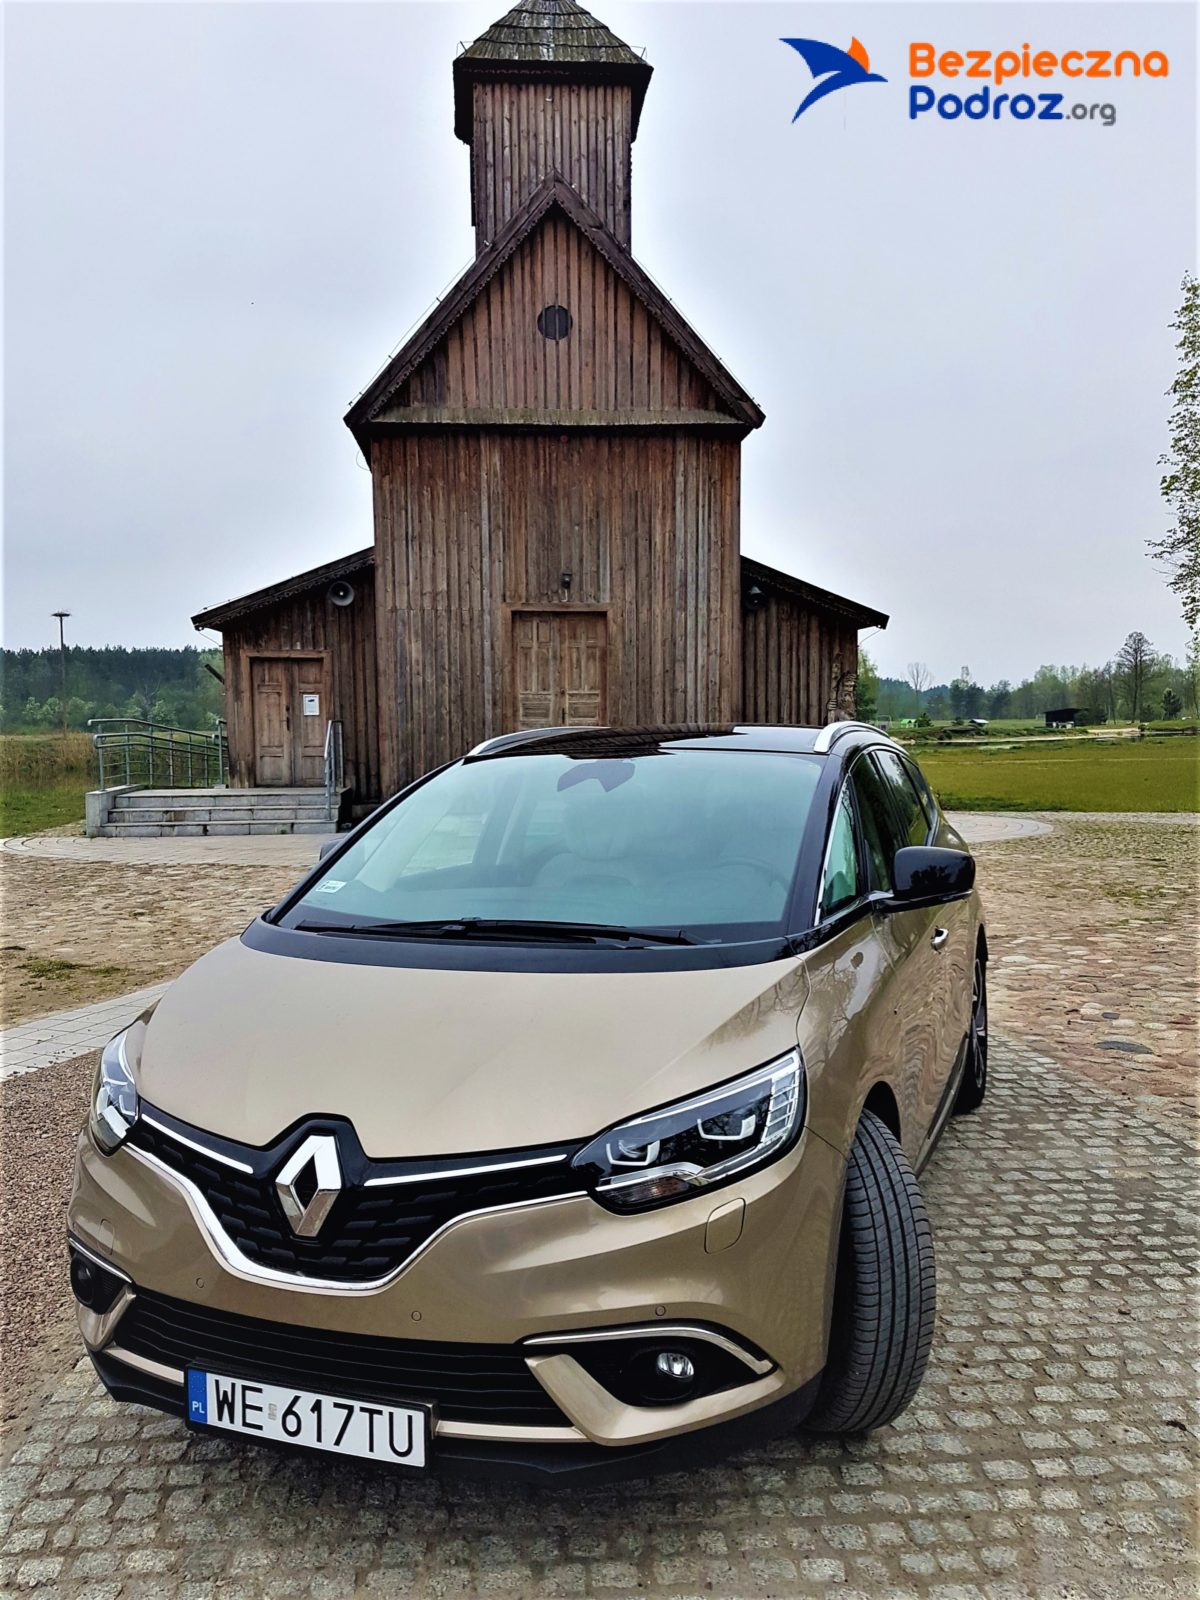 Renault Scenic Grand